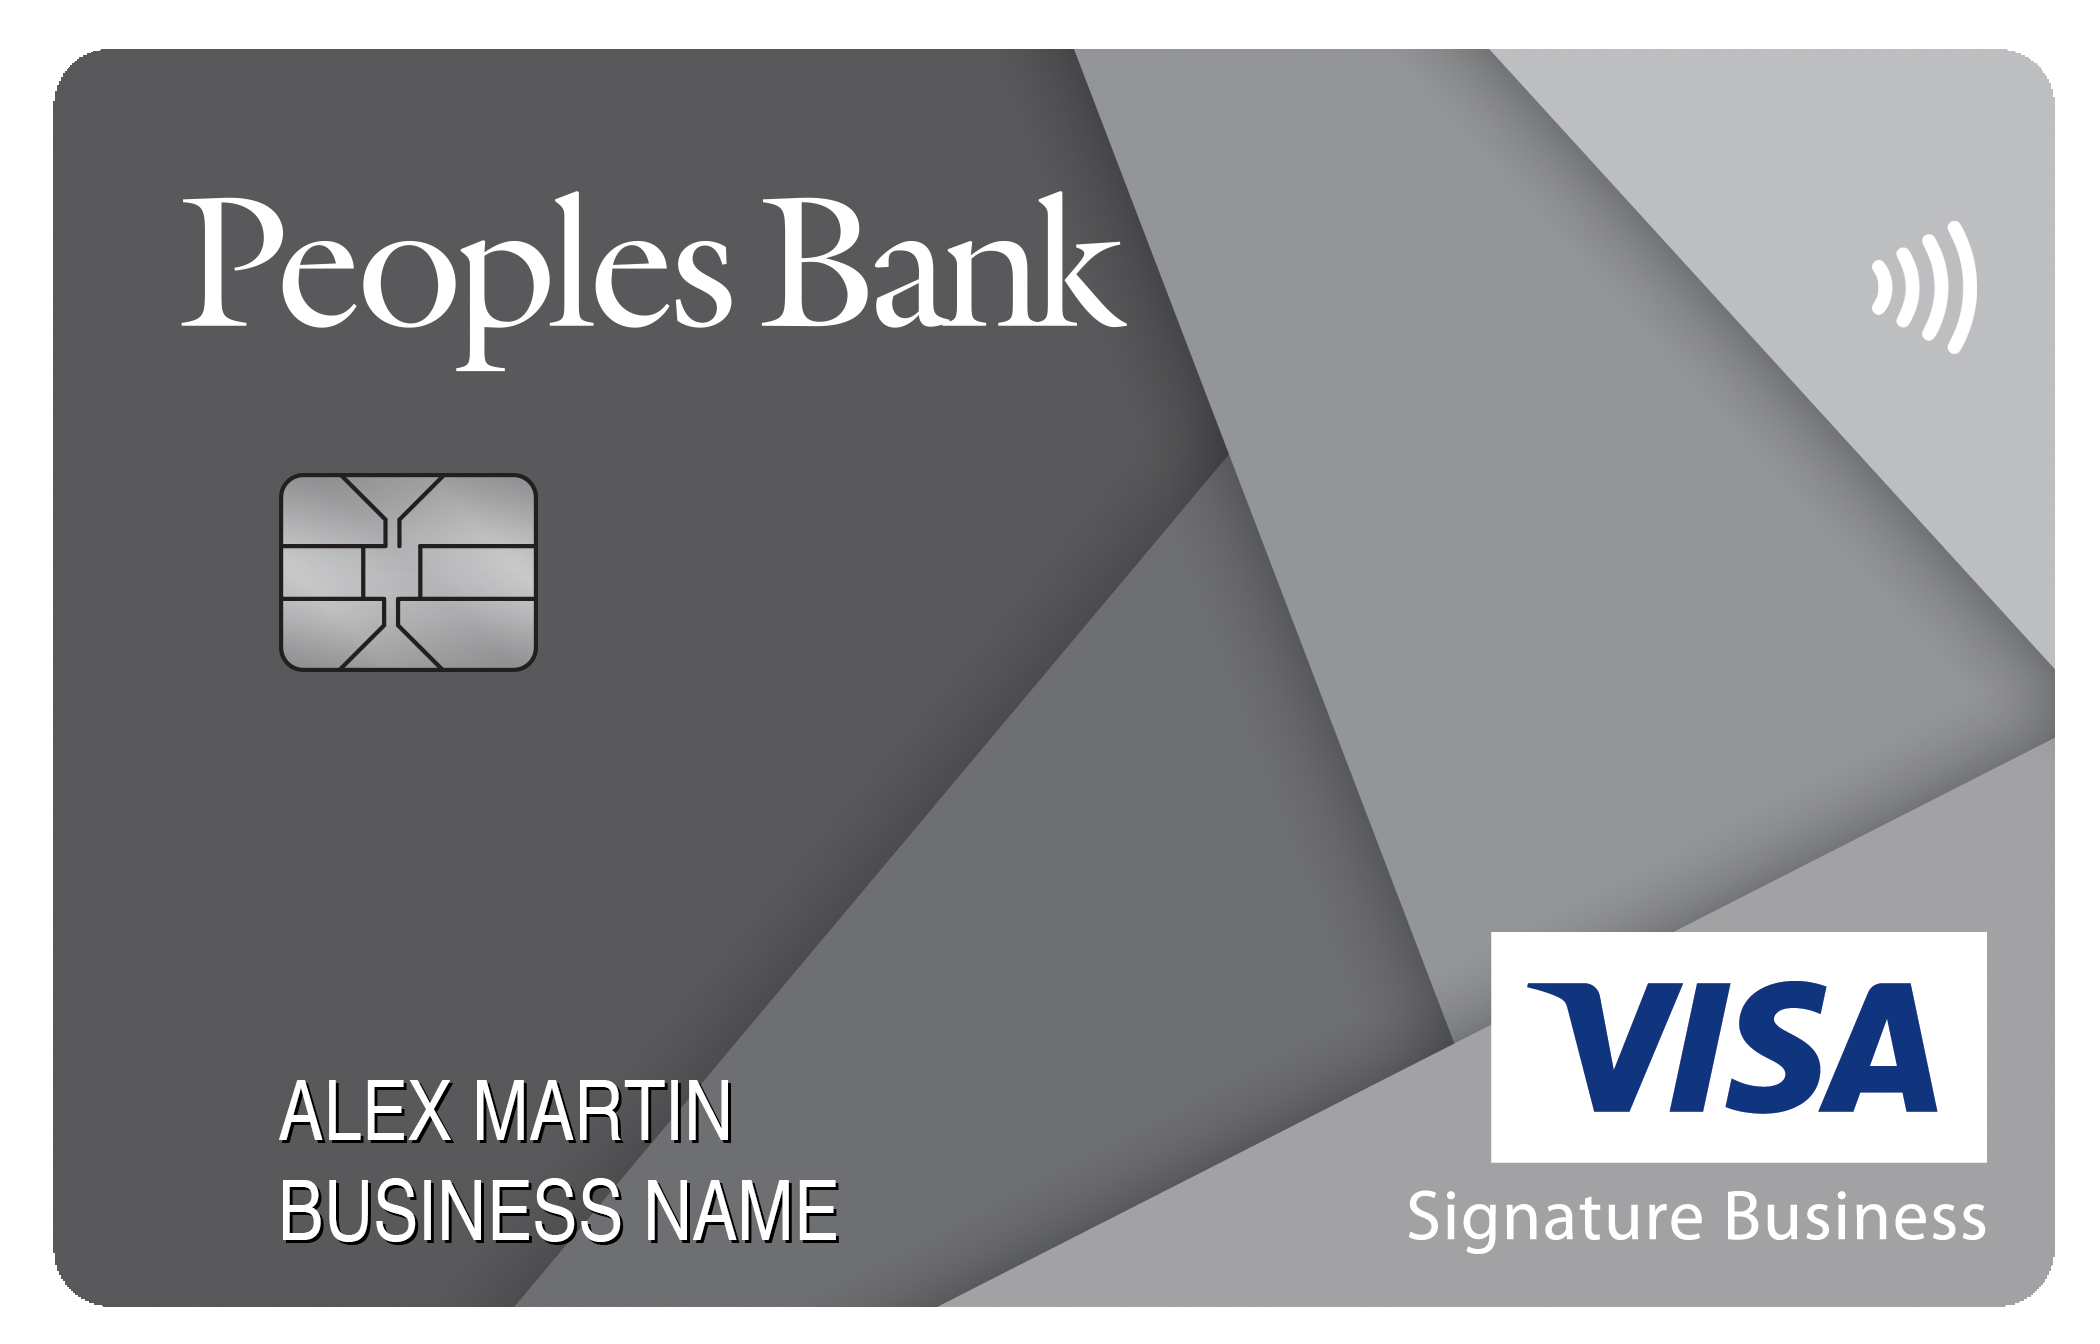 Peoples Bank Smart Business Rewards Card